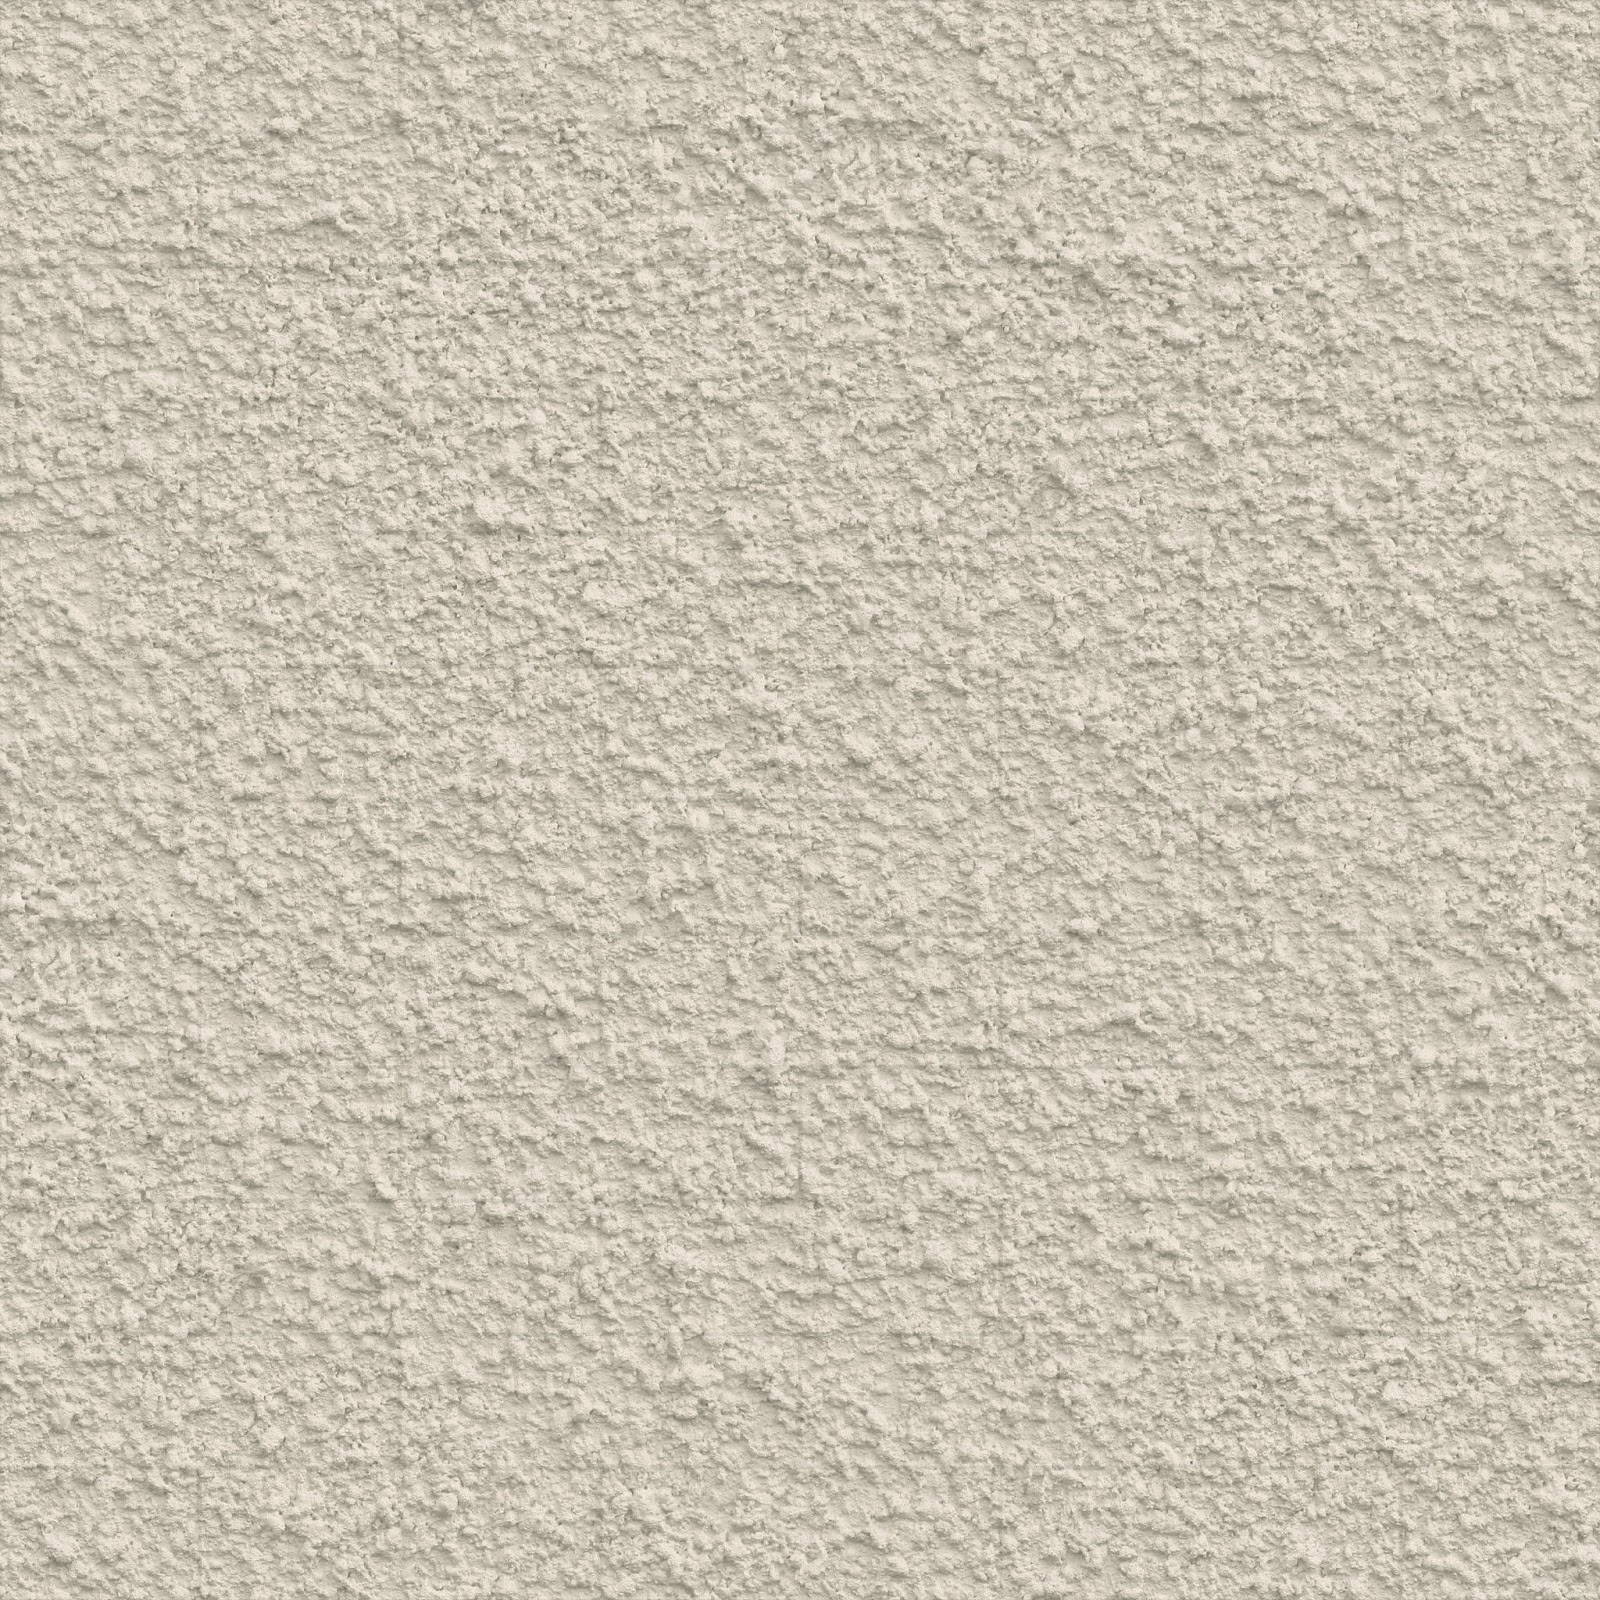 High Resolution Seamless Textures: Tileable Stucco Wall 